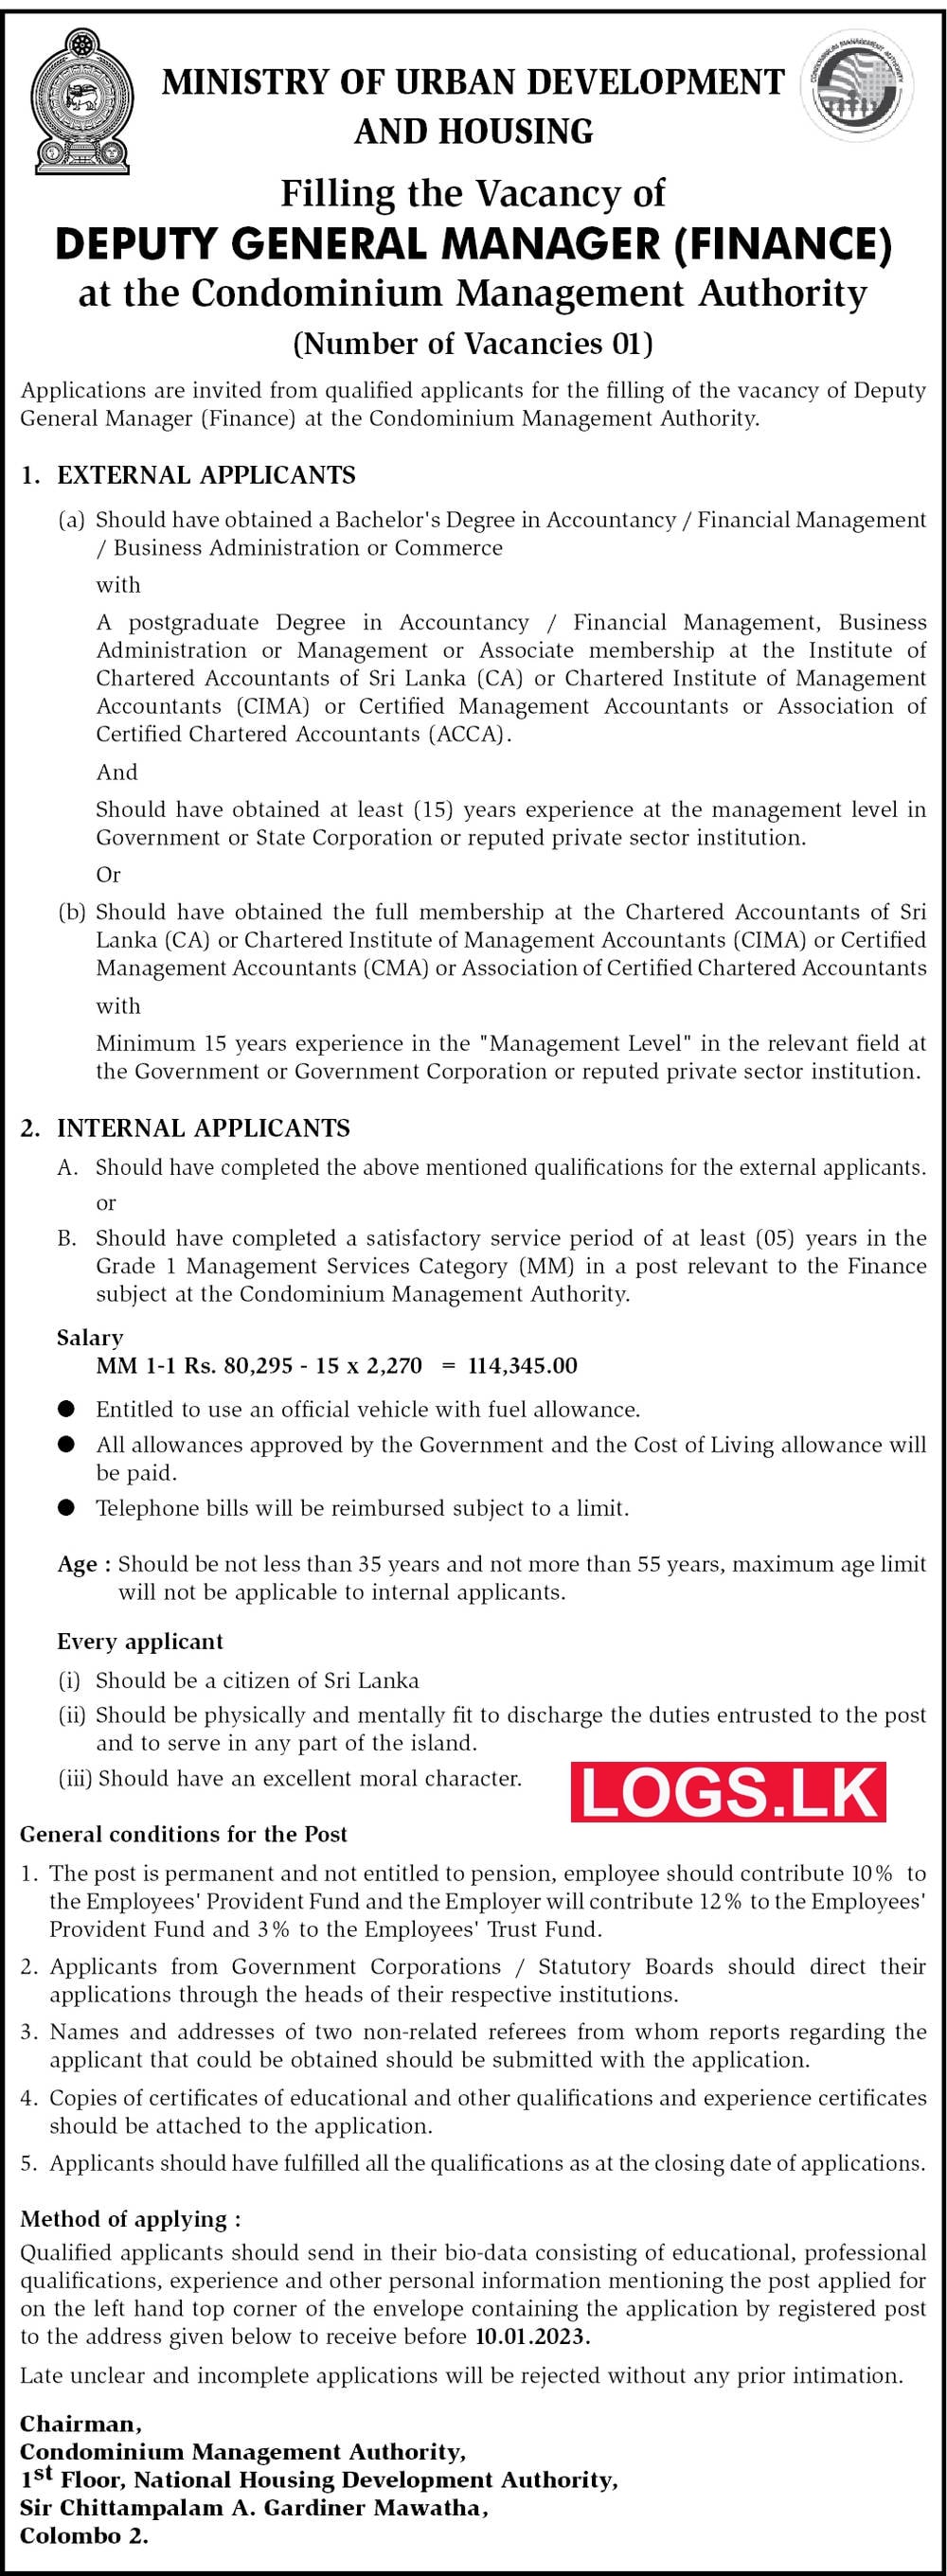 Deputy General Manager Vacancies 2023 in Ministry of Urban Development Job Vacancies 2023